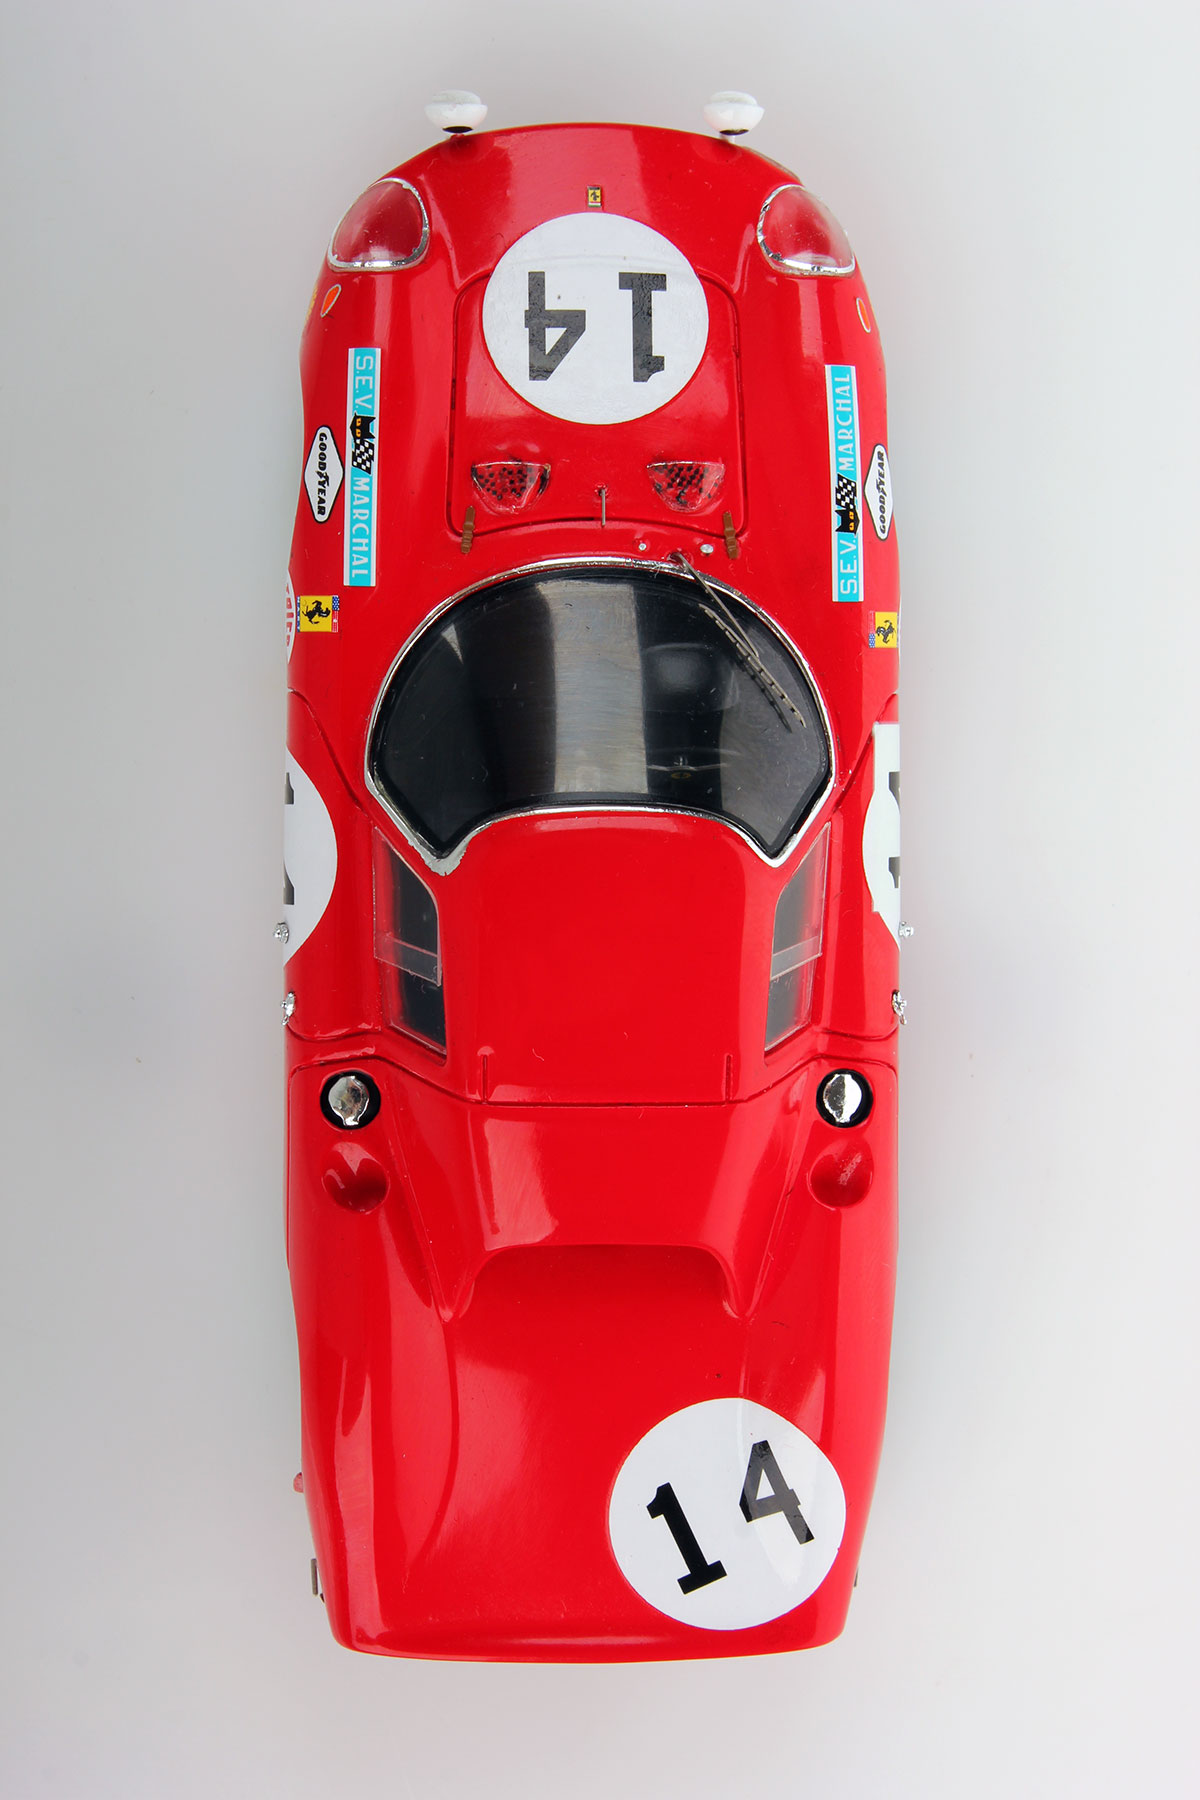 Ferrari 250 LM Le Mans 1968 #14 1:43 - Looksmart Models